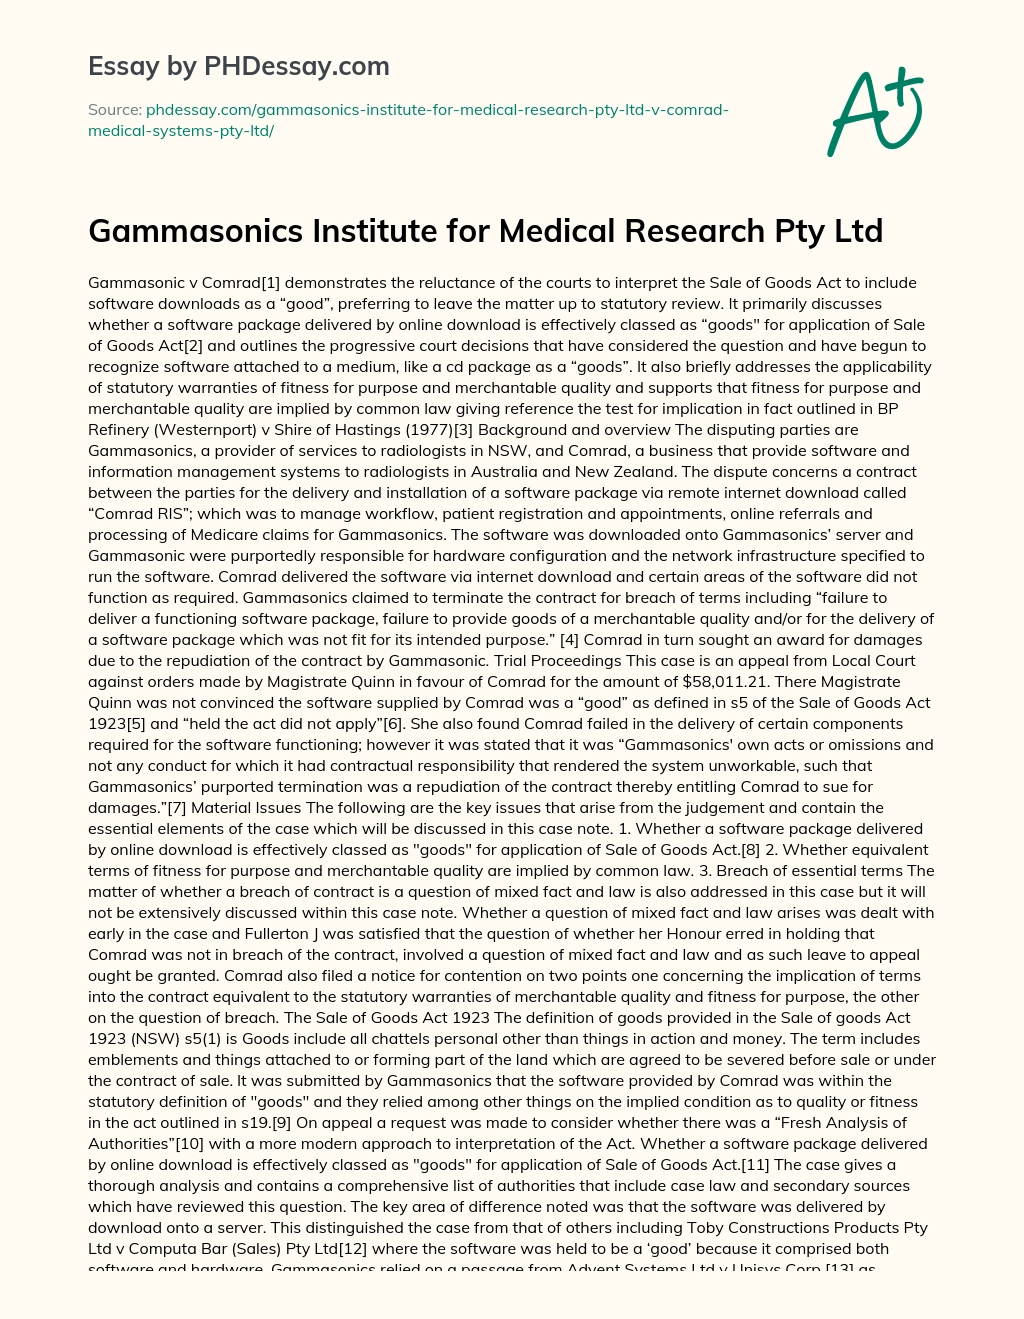 Gammasonics Institute for Medical Research Pty Ltd essay